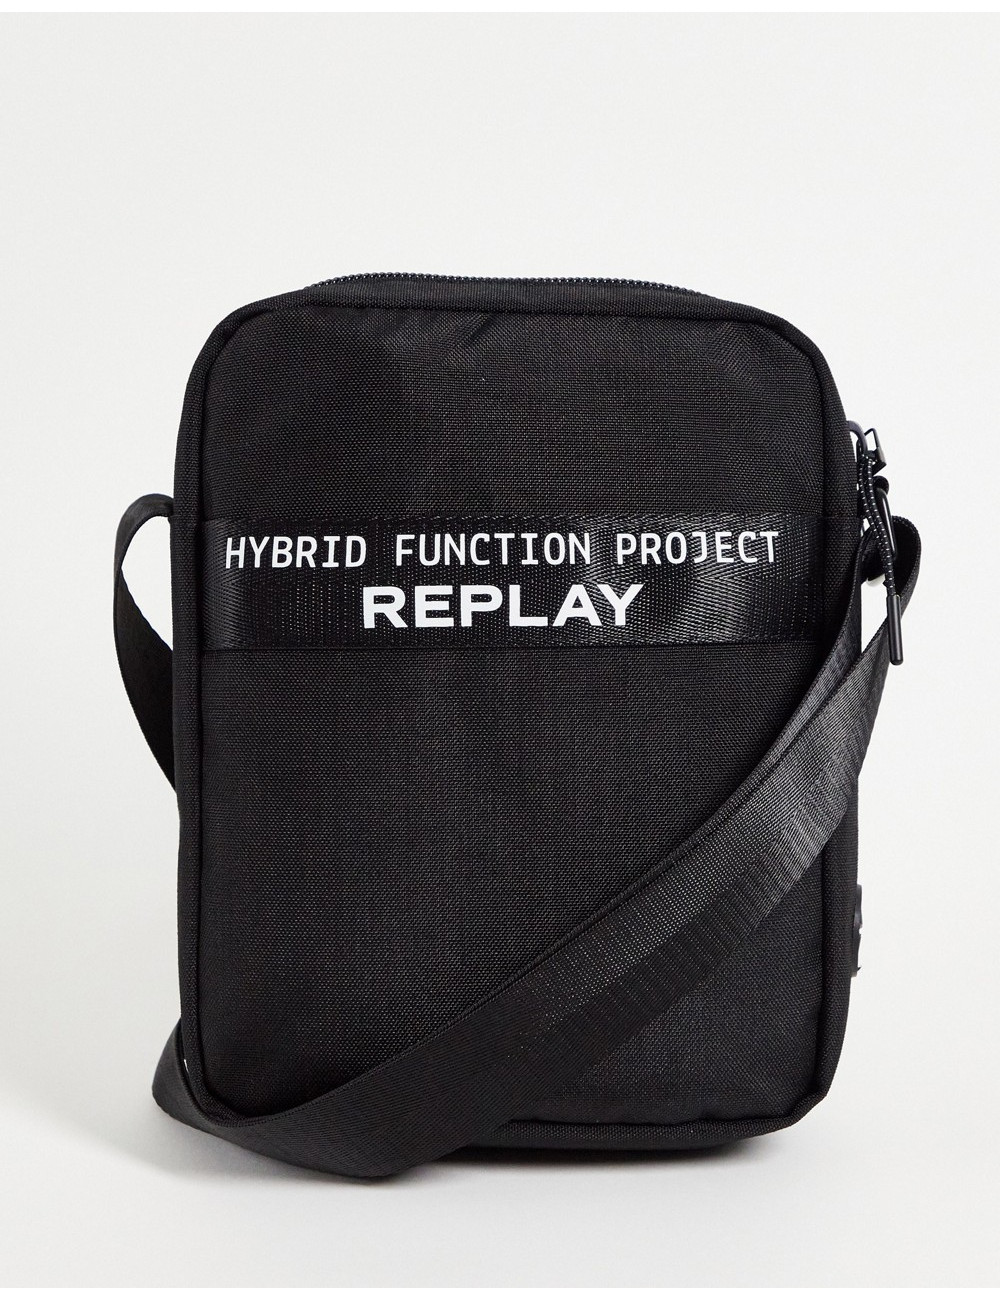 Replay logo flight bag